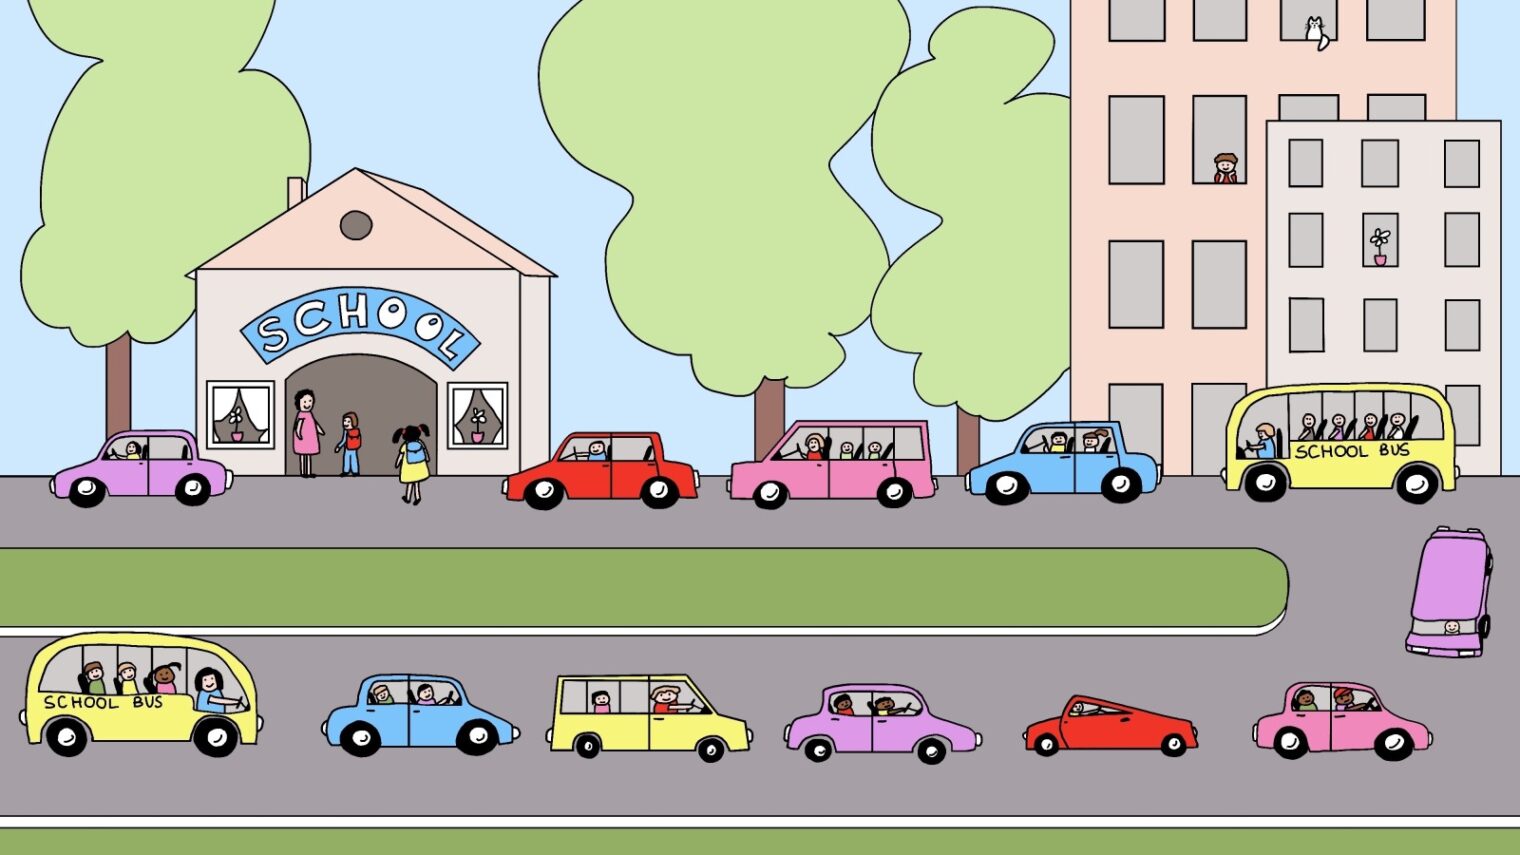 School carpooling illustration by Lena Bely/Shutterstock.com